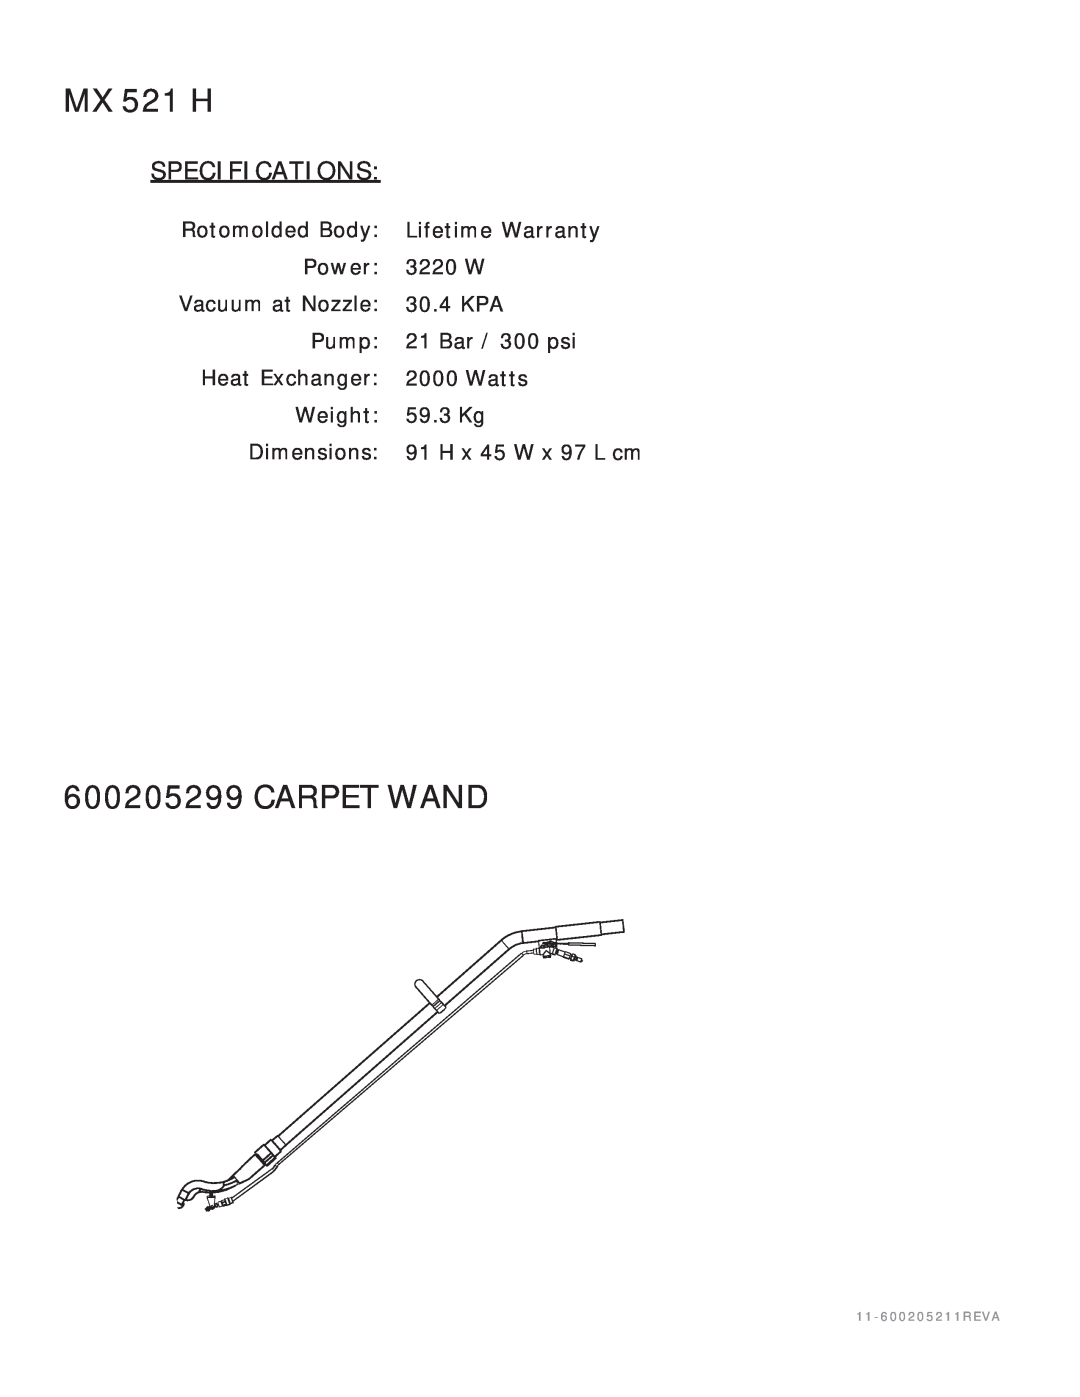 Nilfisk-ALTO MX 521 H manual Carpet Wand, Specifications 